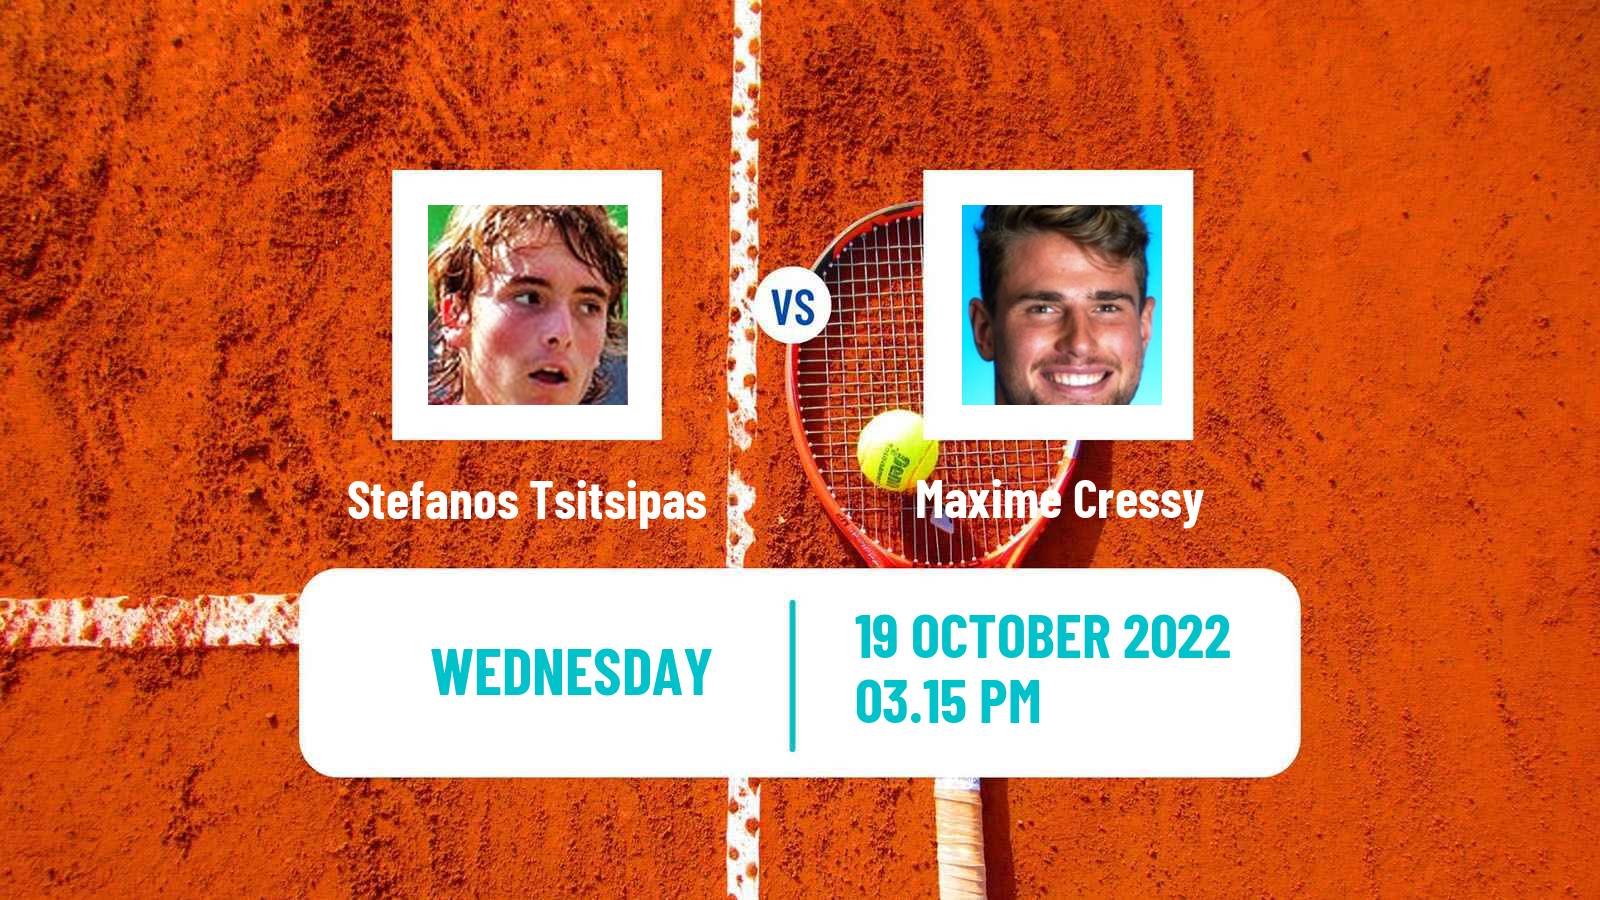 Tennis ATP Stockholm Stefanos Tsitsipas - Maxime Cressy